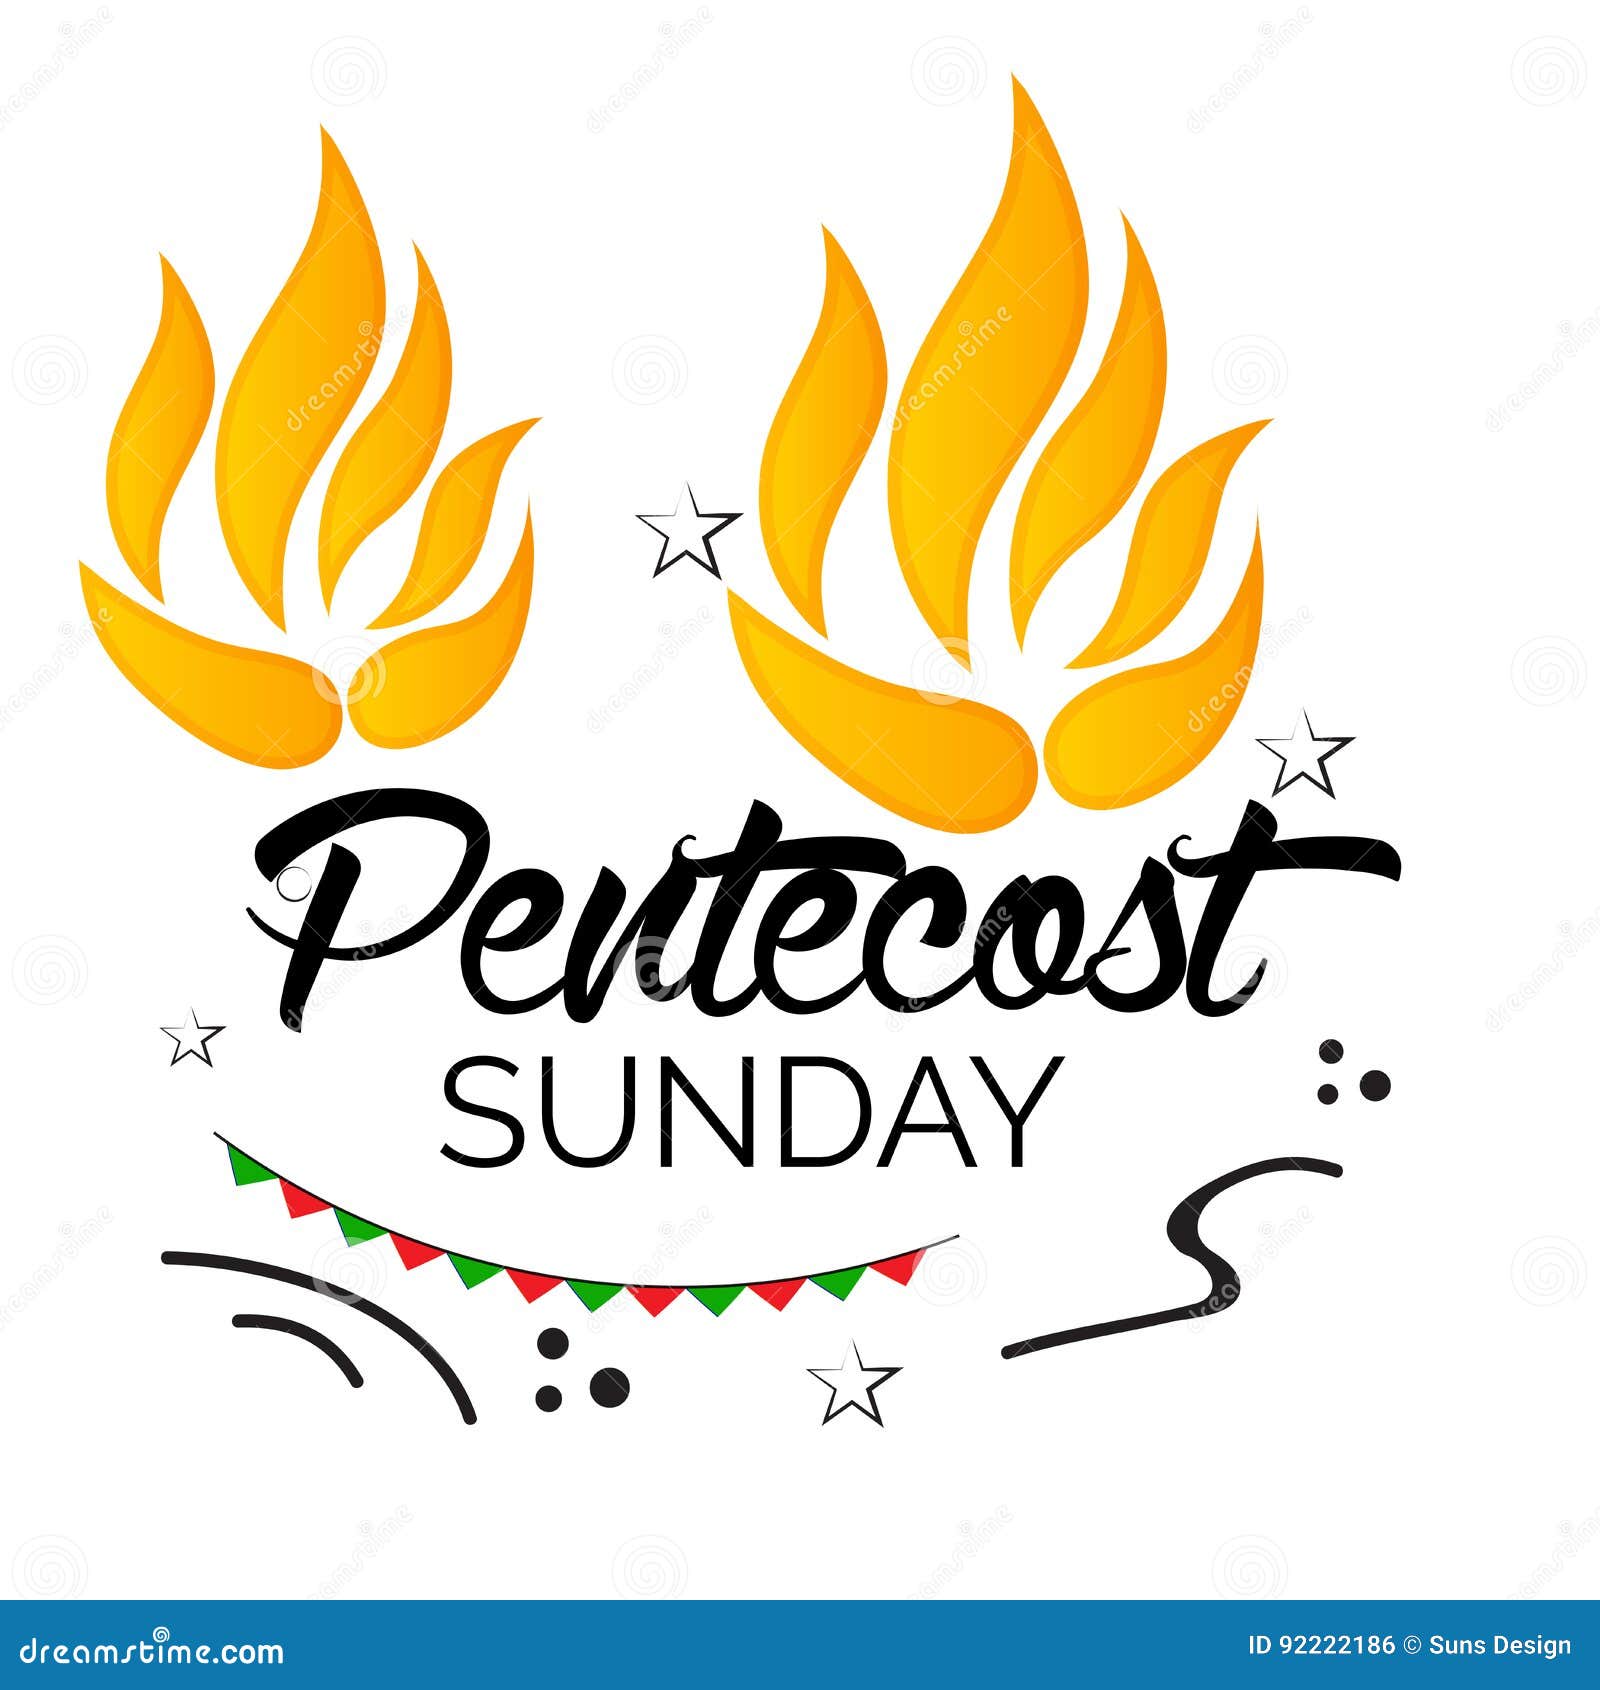 free christian clip art pentecost - photo #24